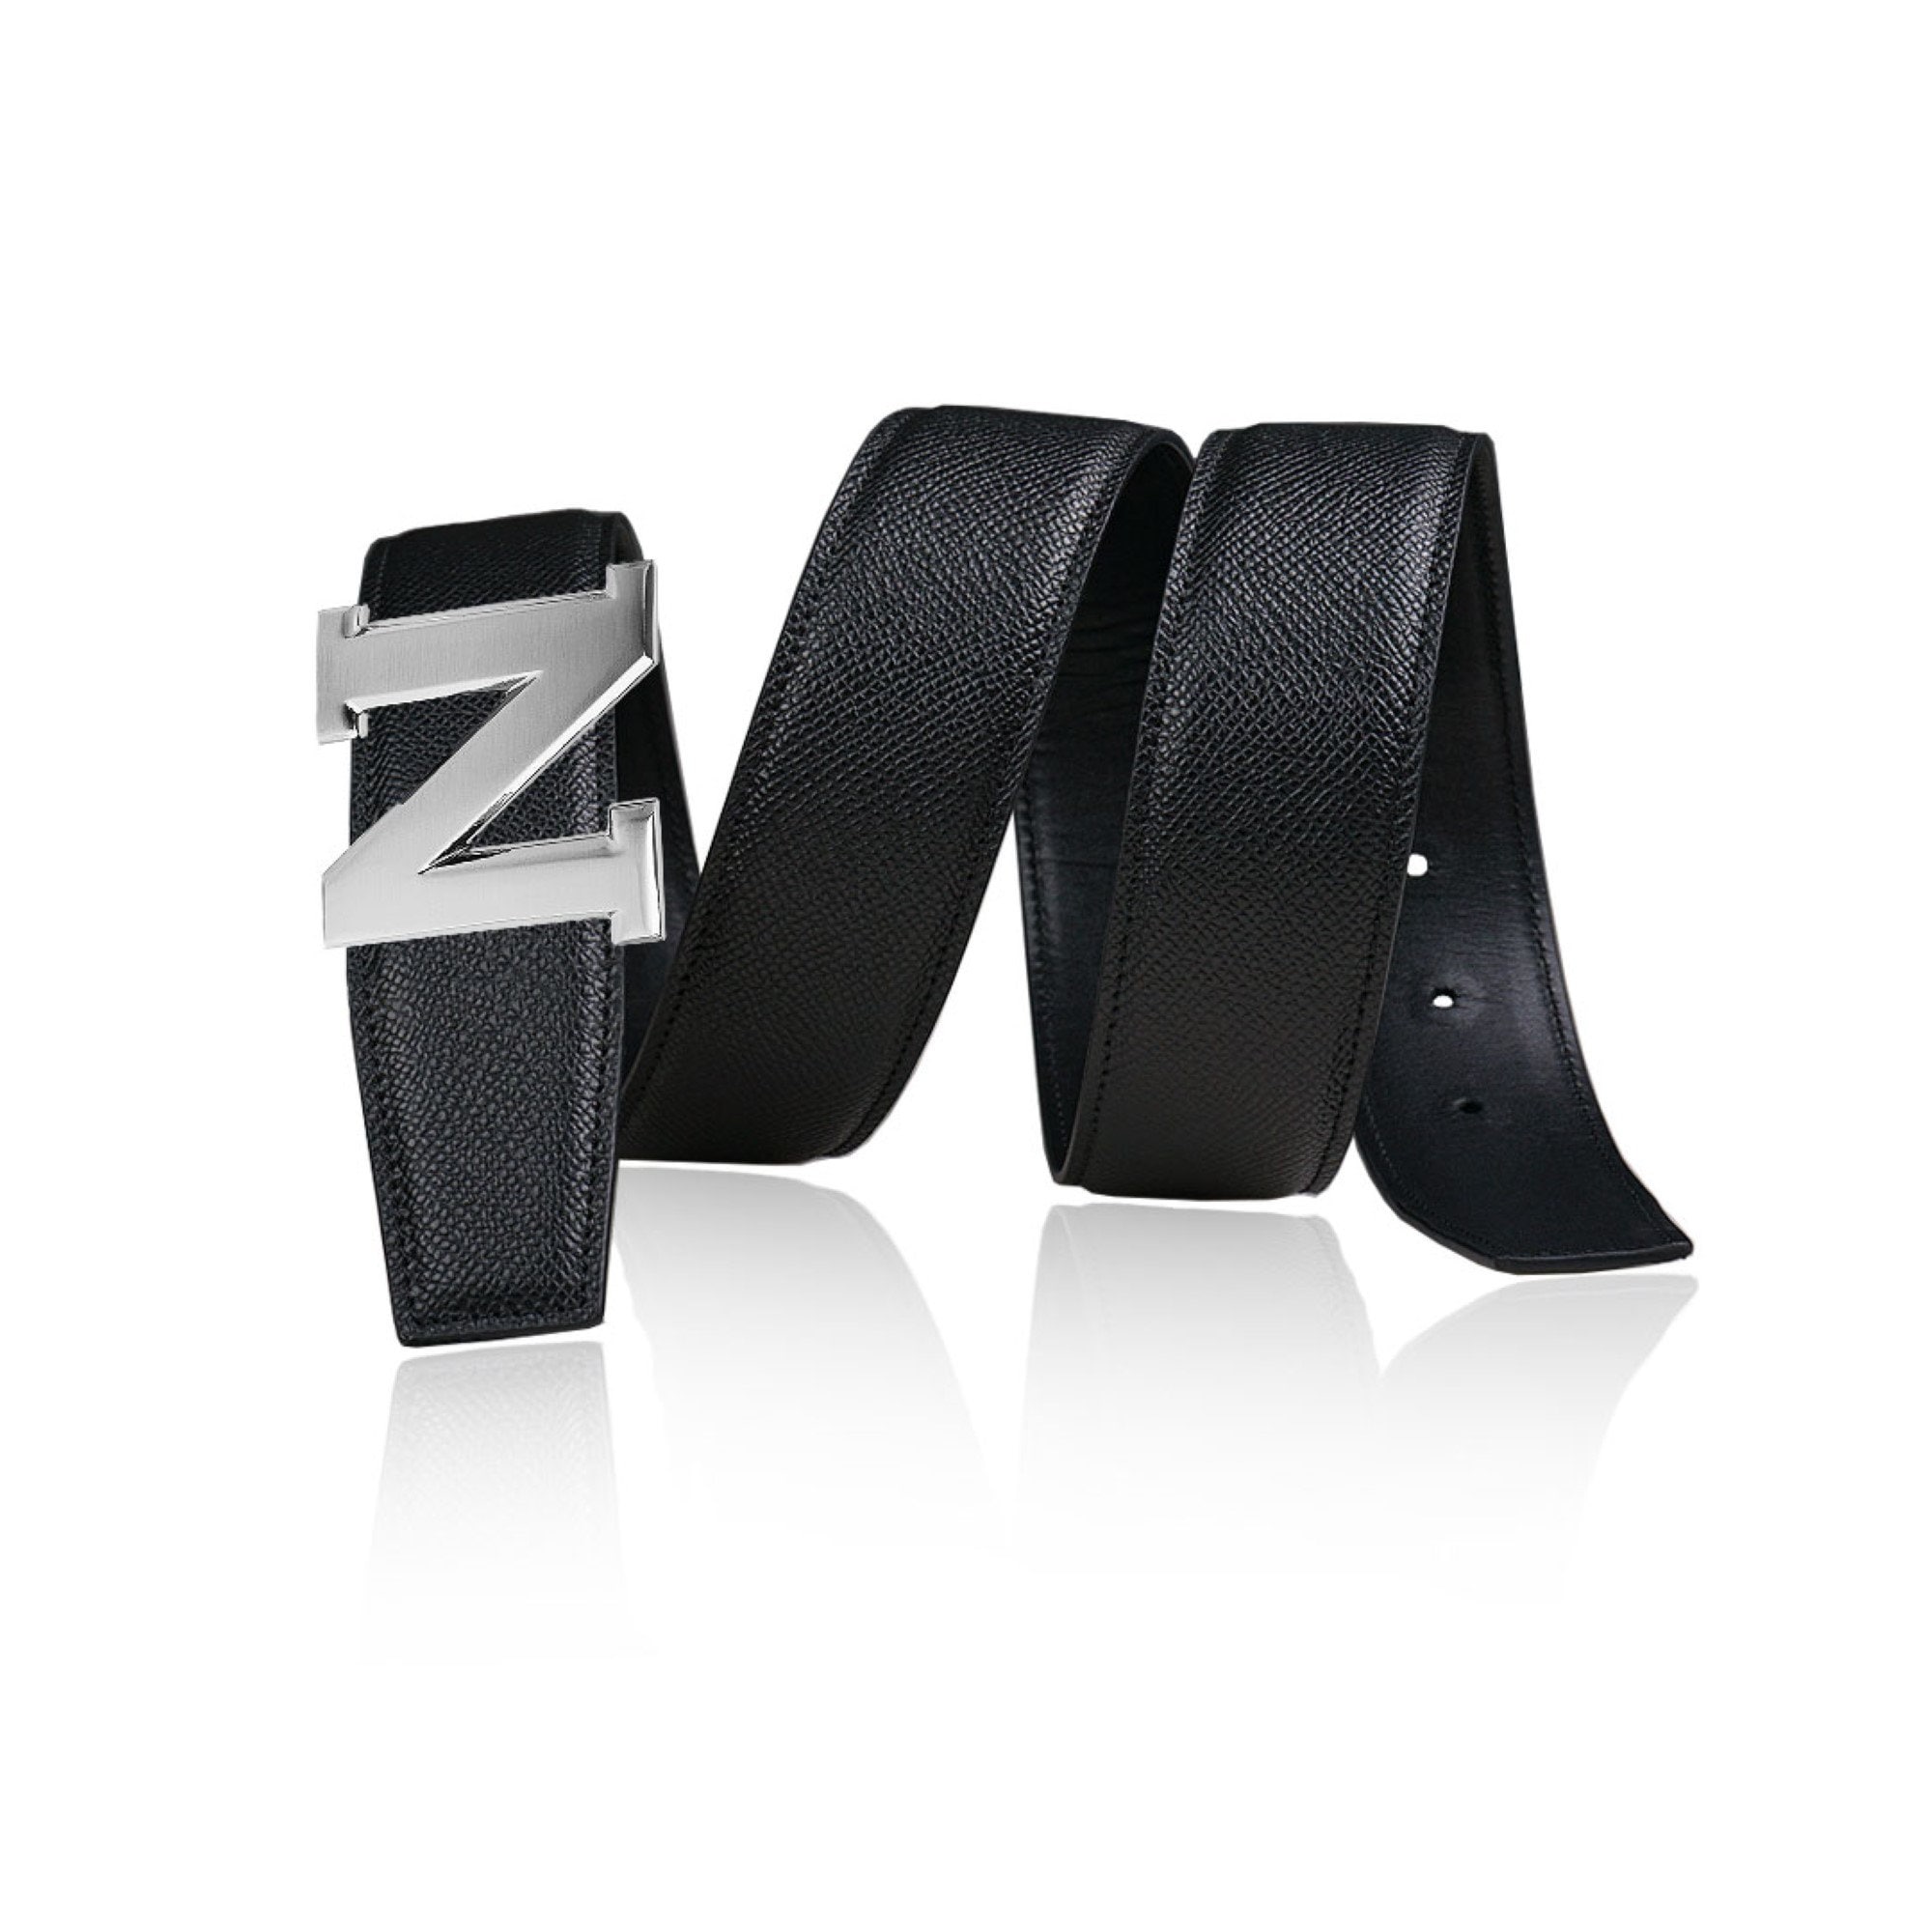 DJCAIZYY 1.5 (40 mm) Reversible Belt Buckle Replacement Belt Buckle